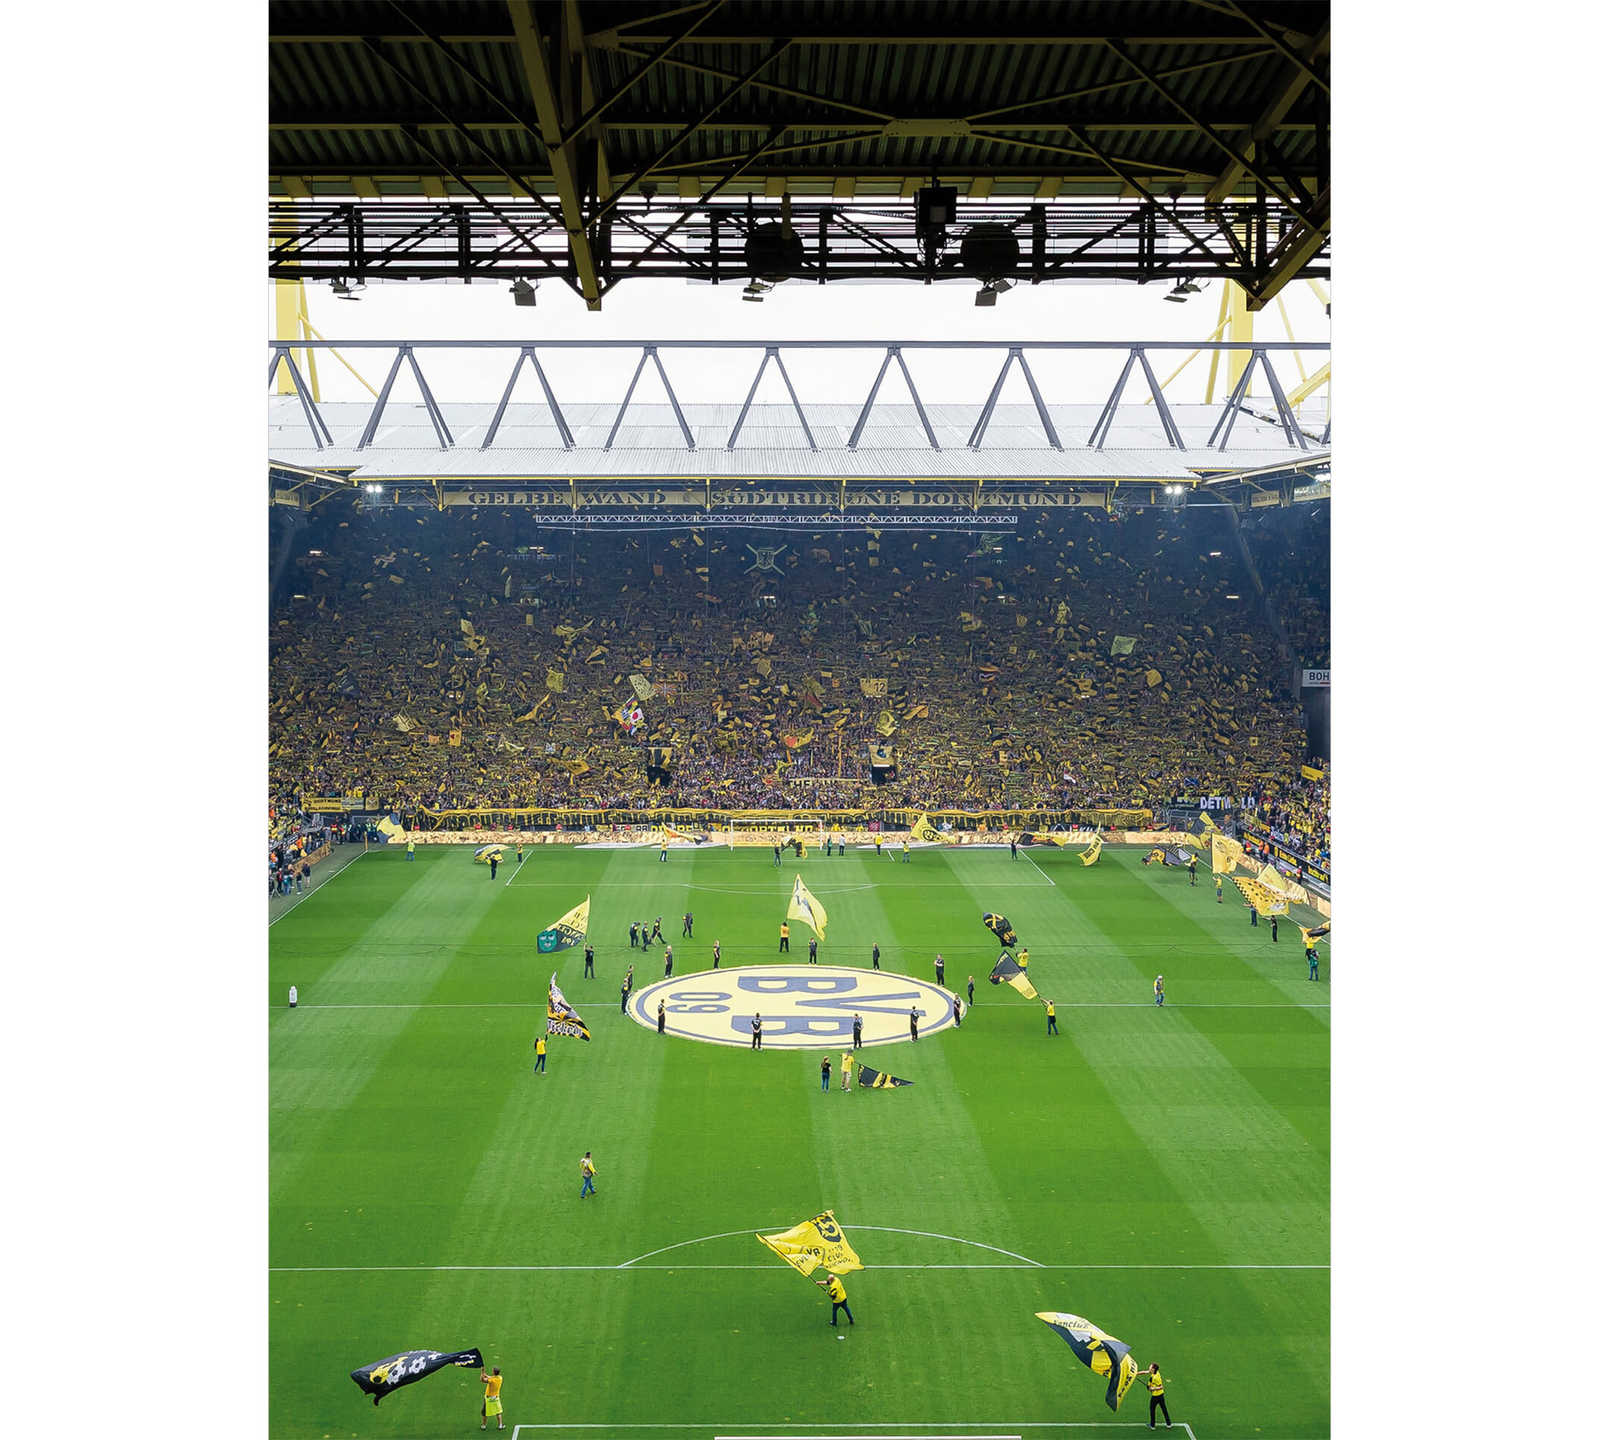         Photo wallpaper BVB stadium with fans, portrait format
    